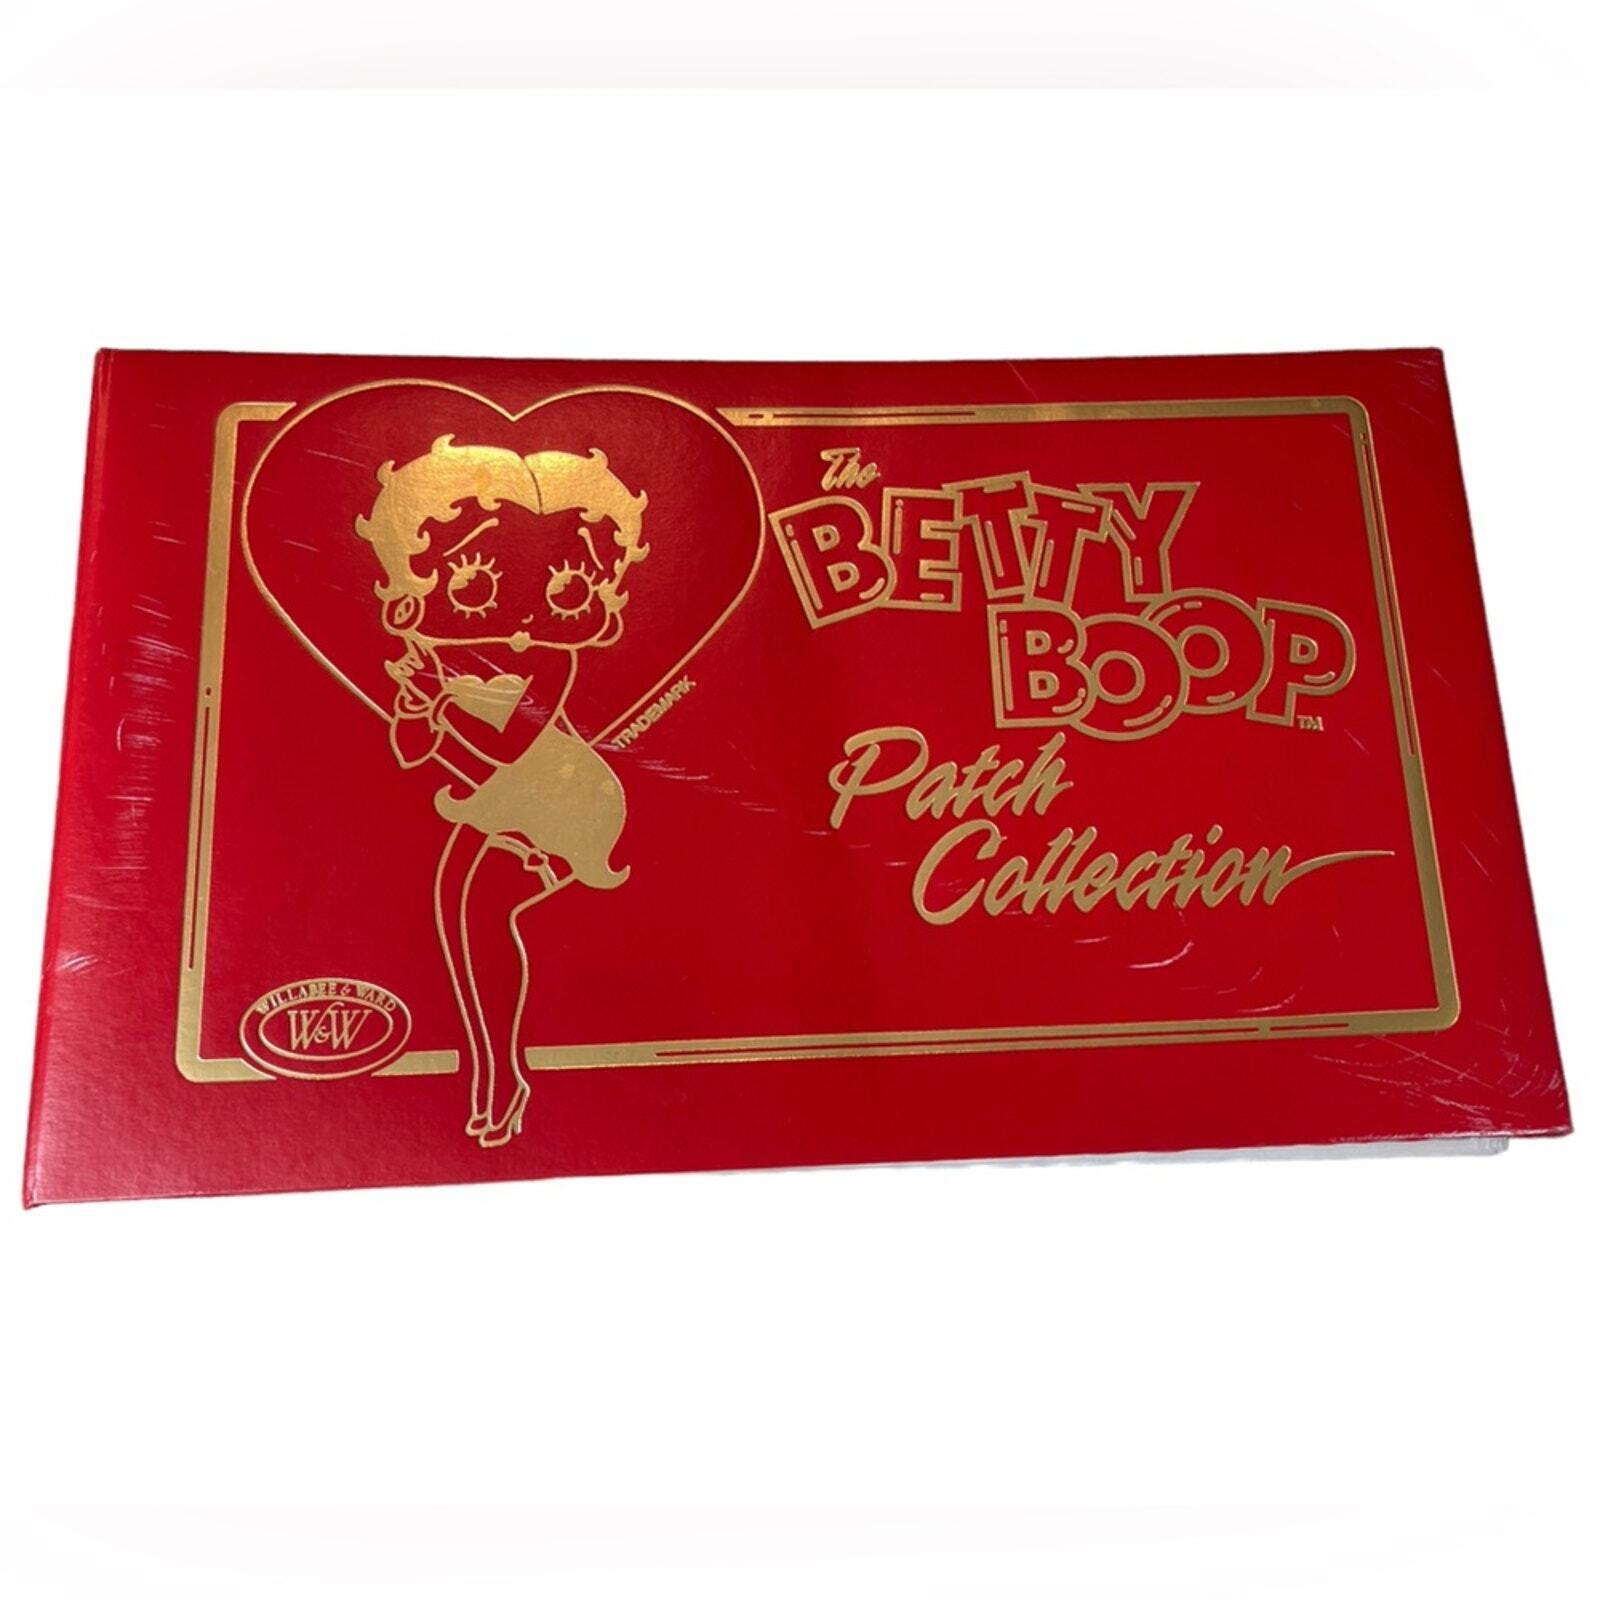 Betty Boop patch collection, binder,  willabee & ward WW, vintage